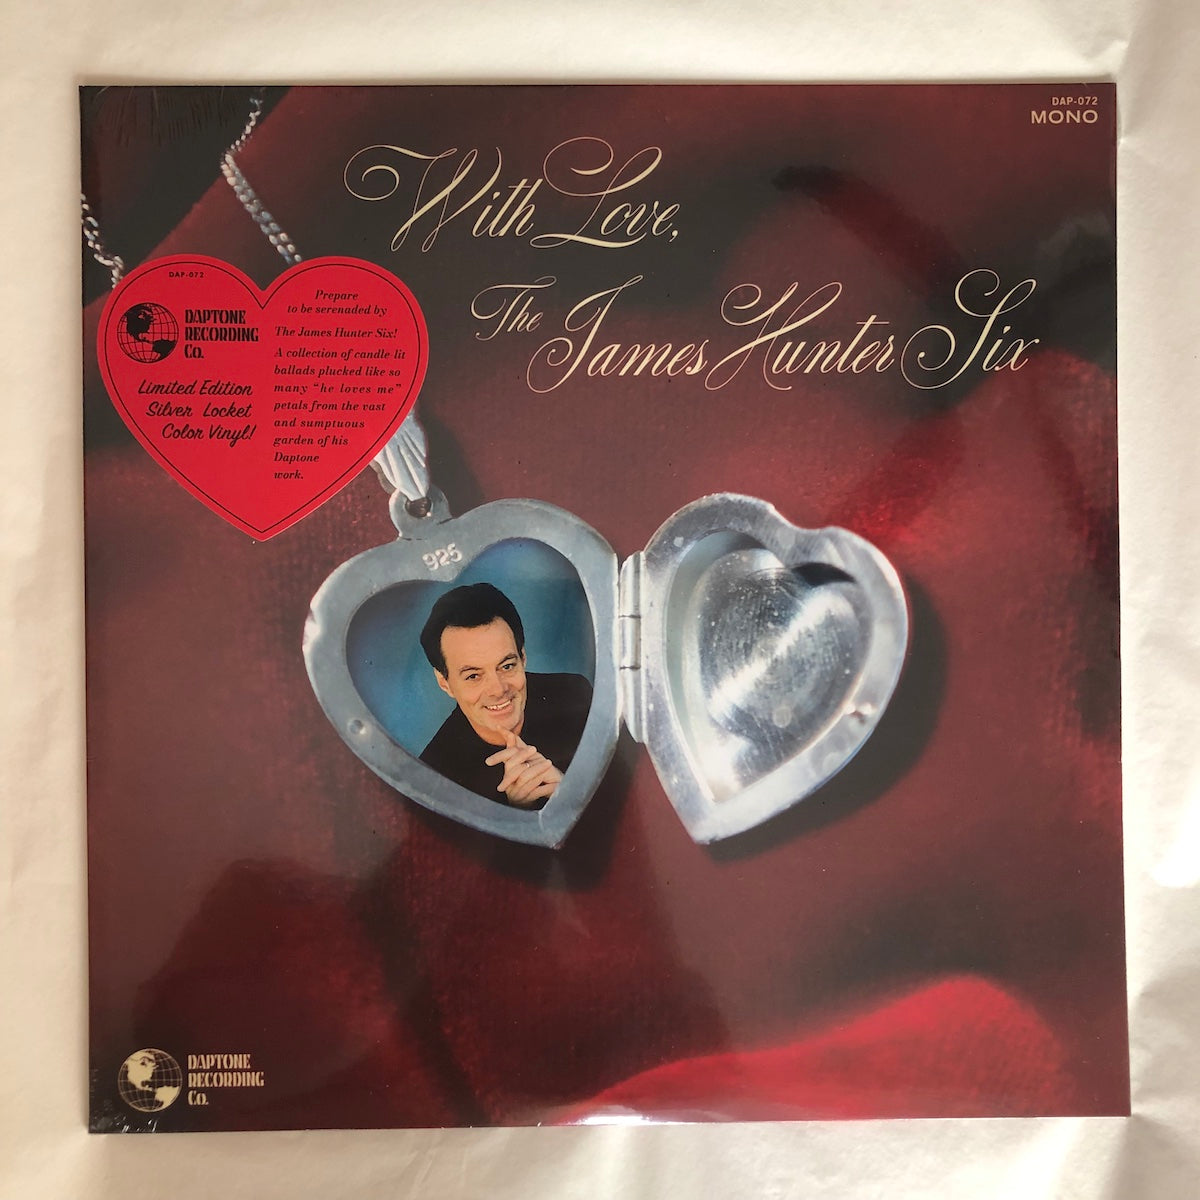 With Love: Silver Vinyl LP